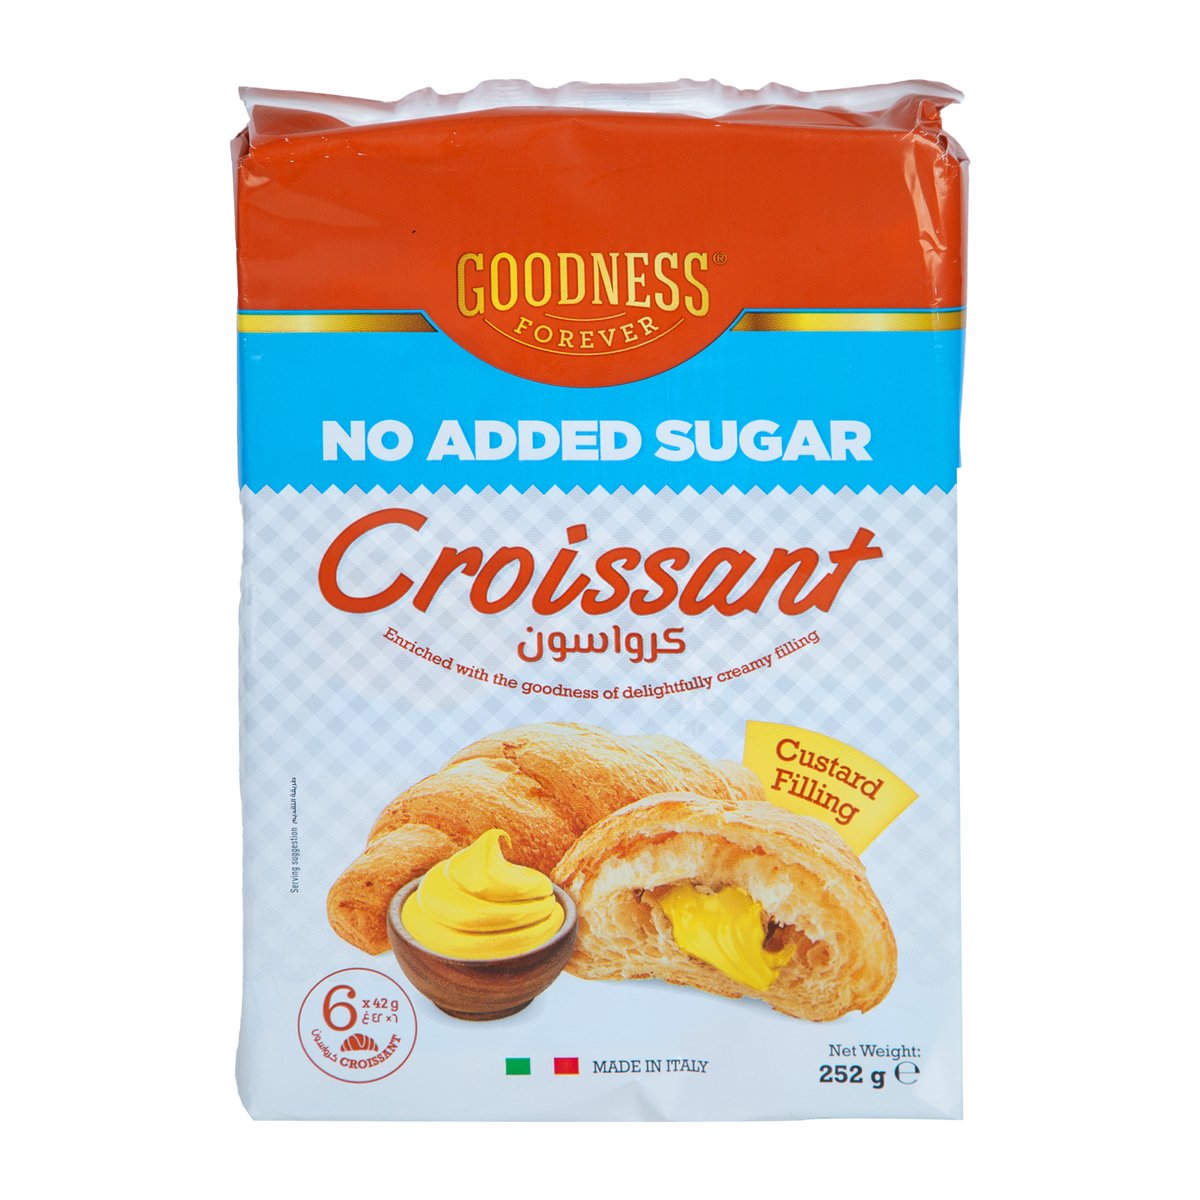 Goodness Forever Custard Croissant No Added Sugar 6 x 42 g